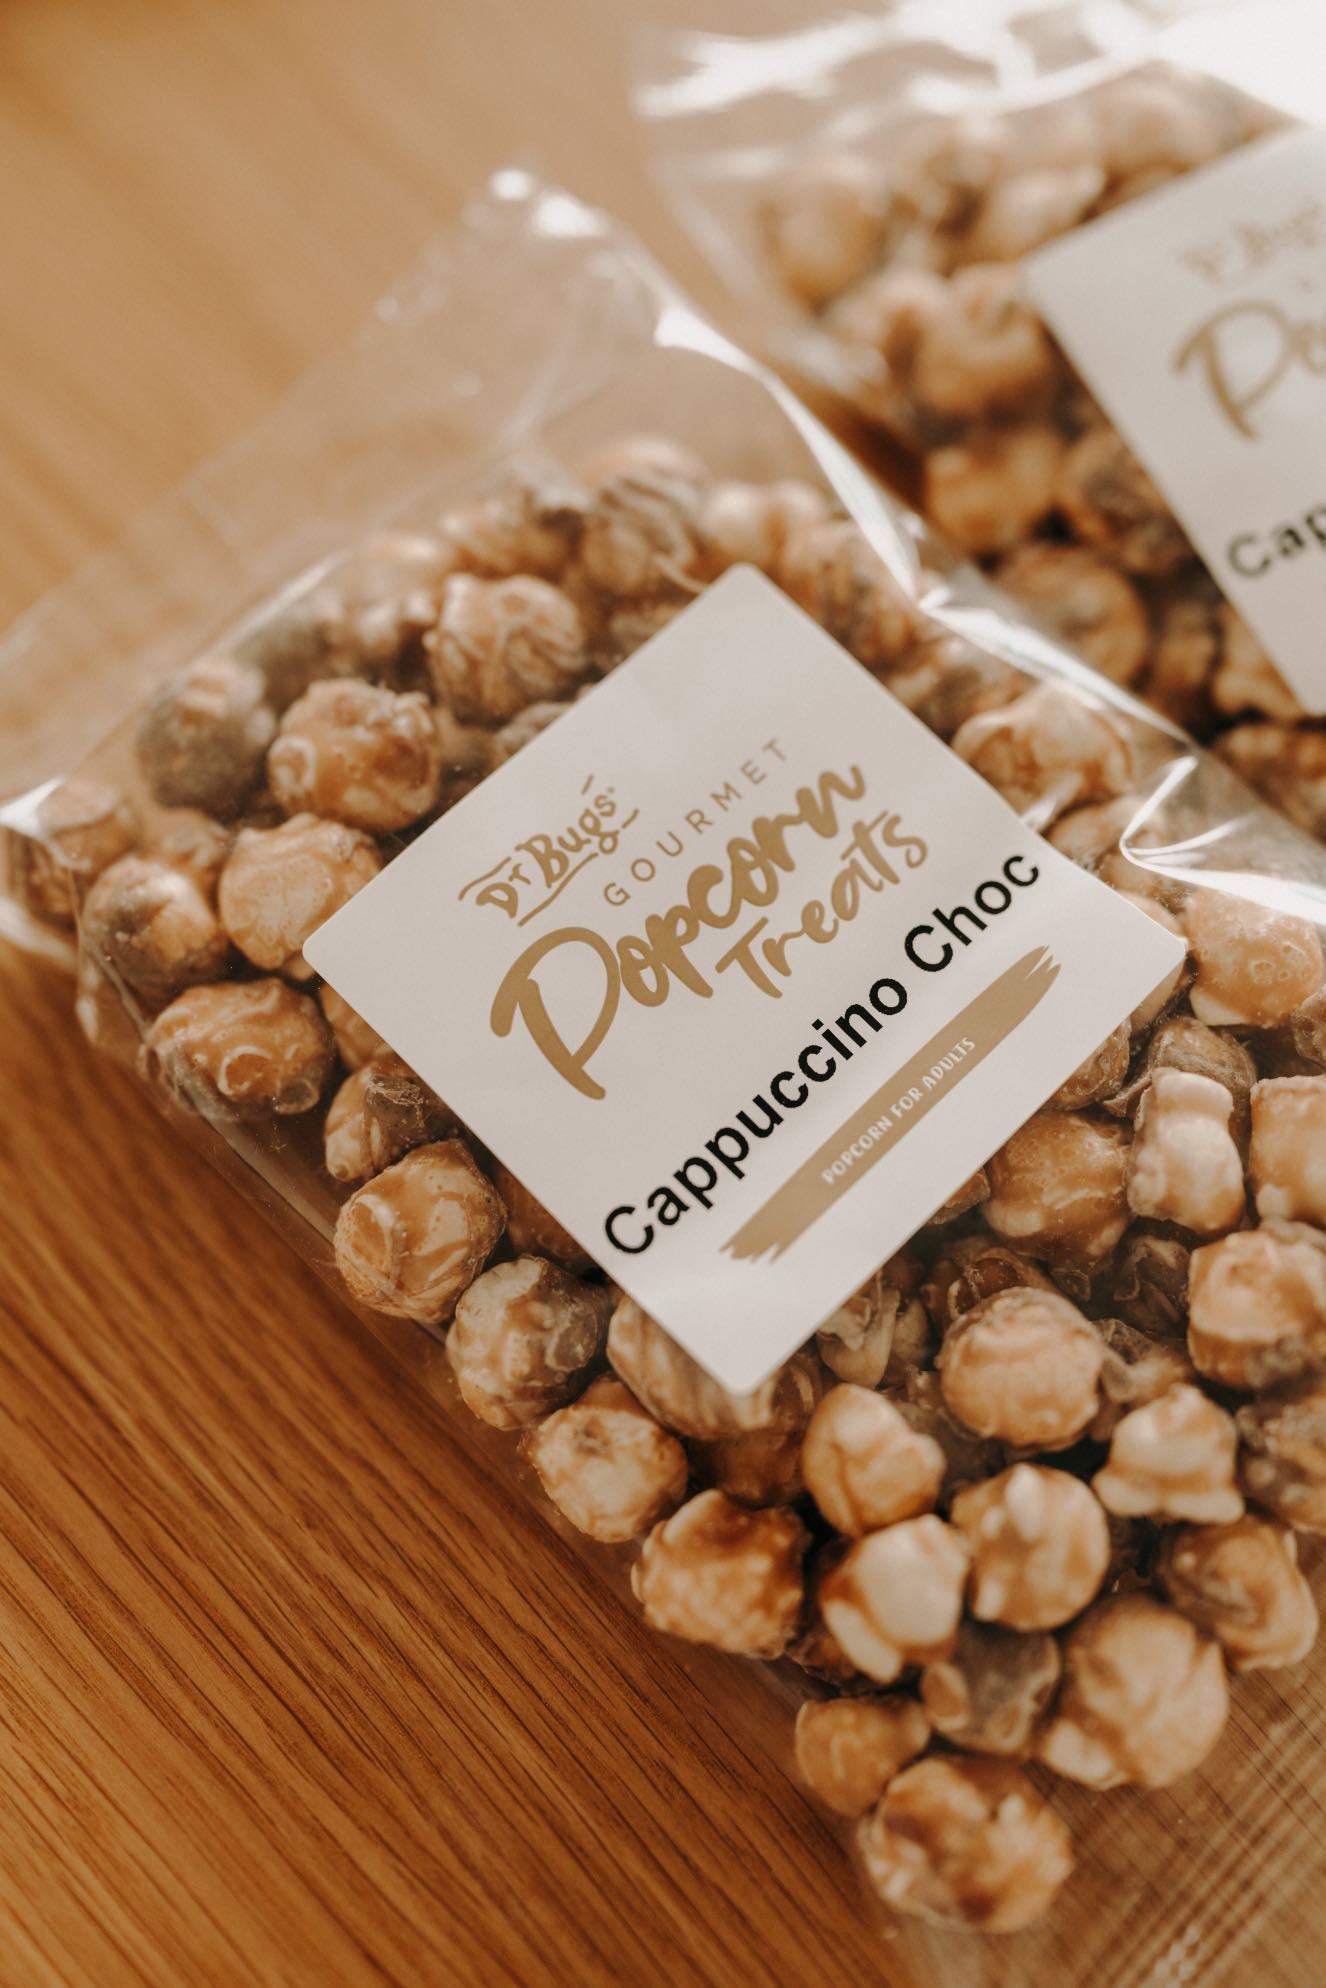 Dr Bugs Cappuccino Choc Popcorn Treats Bumper Box (Limited Edition)